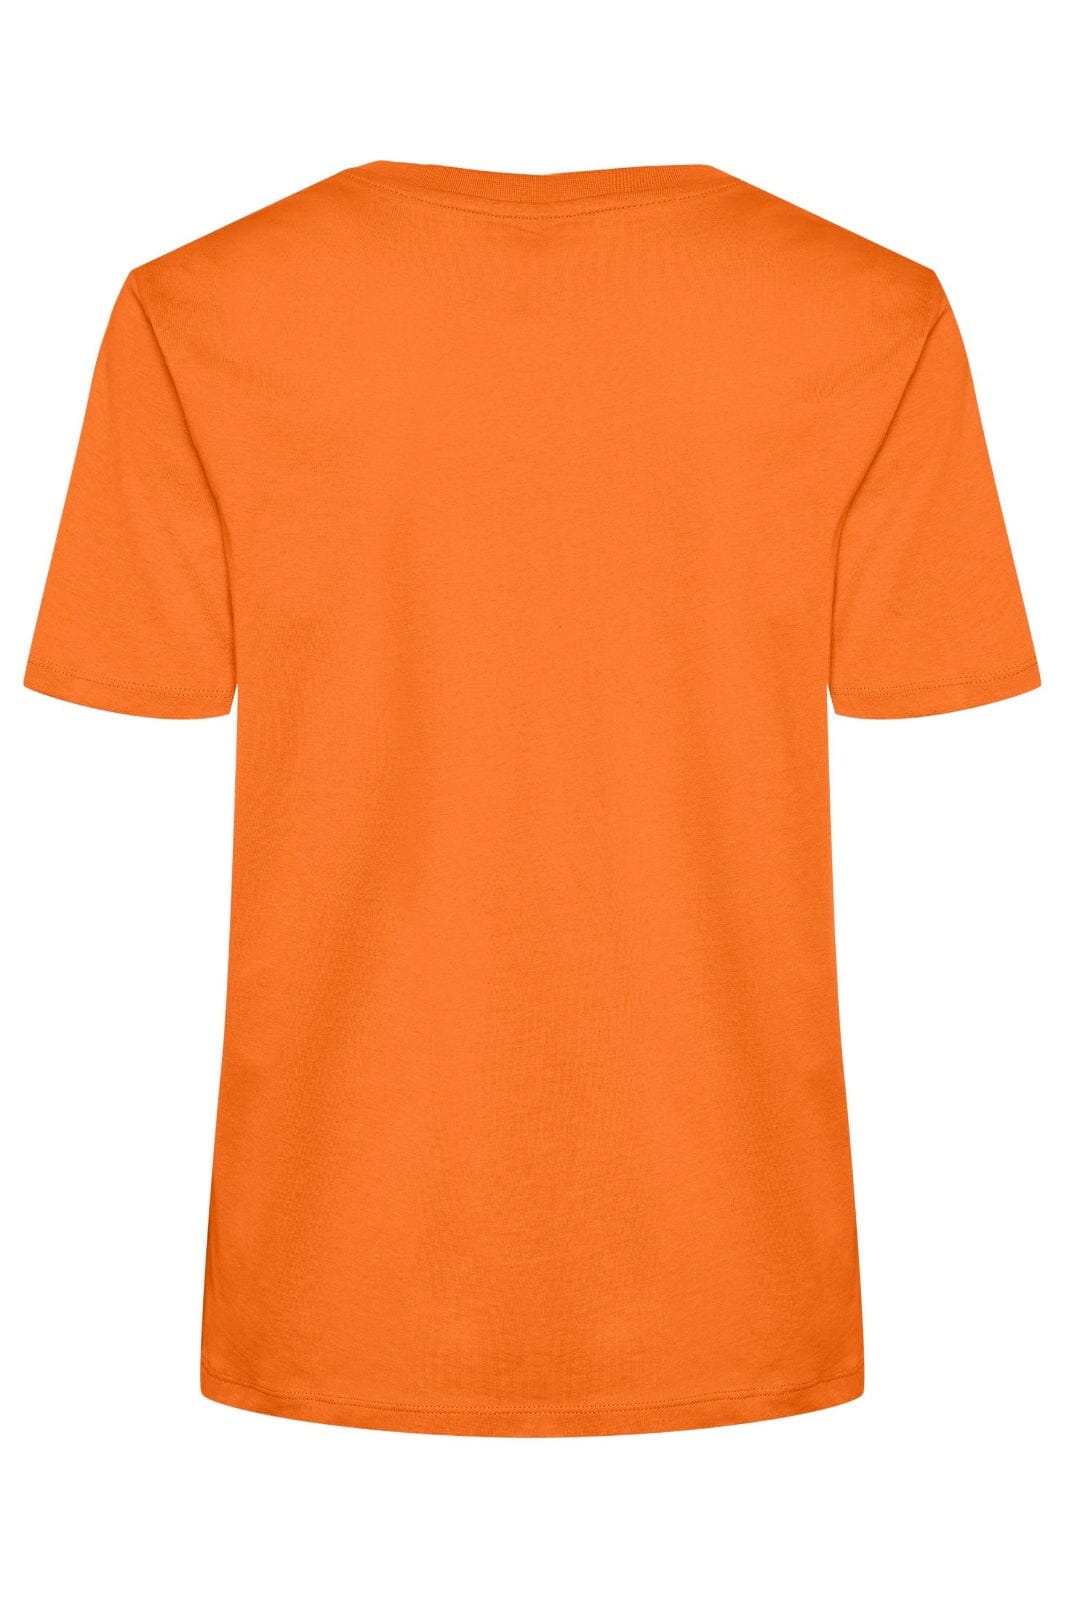 Pieces - Pcria Ss Solid Tee - 4280165 Persimmon Orange T-shirts 